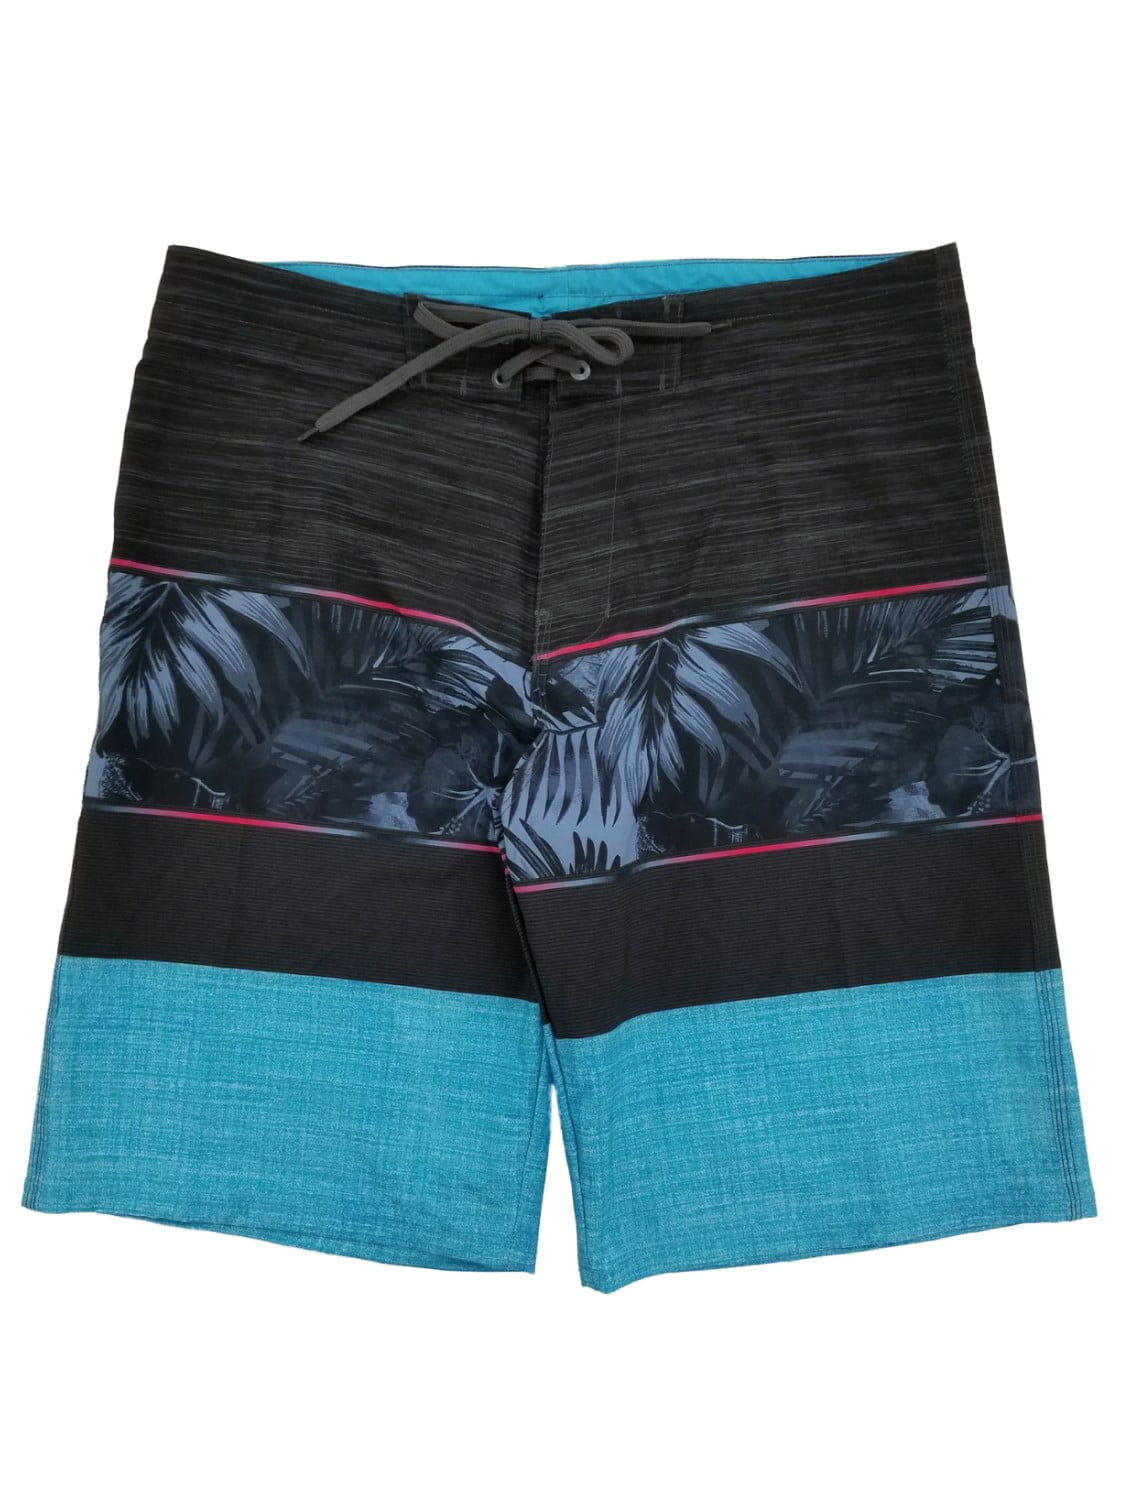 RIZI 2021 Mens Swim Shorts Mesh Lining Hawaiian Beach Trunks Quick Dry Surf Bathing Suit Board Pockets Inseam Shorts Swimwear 